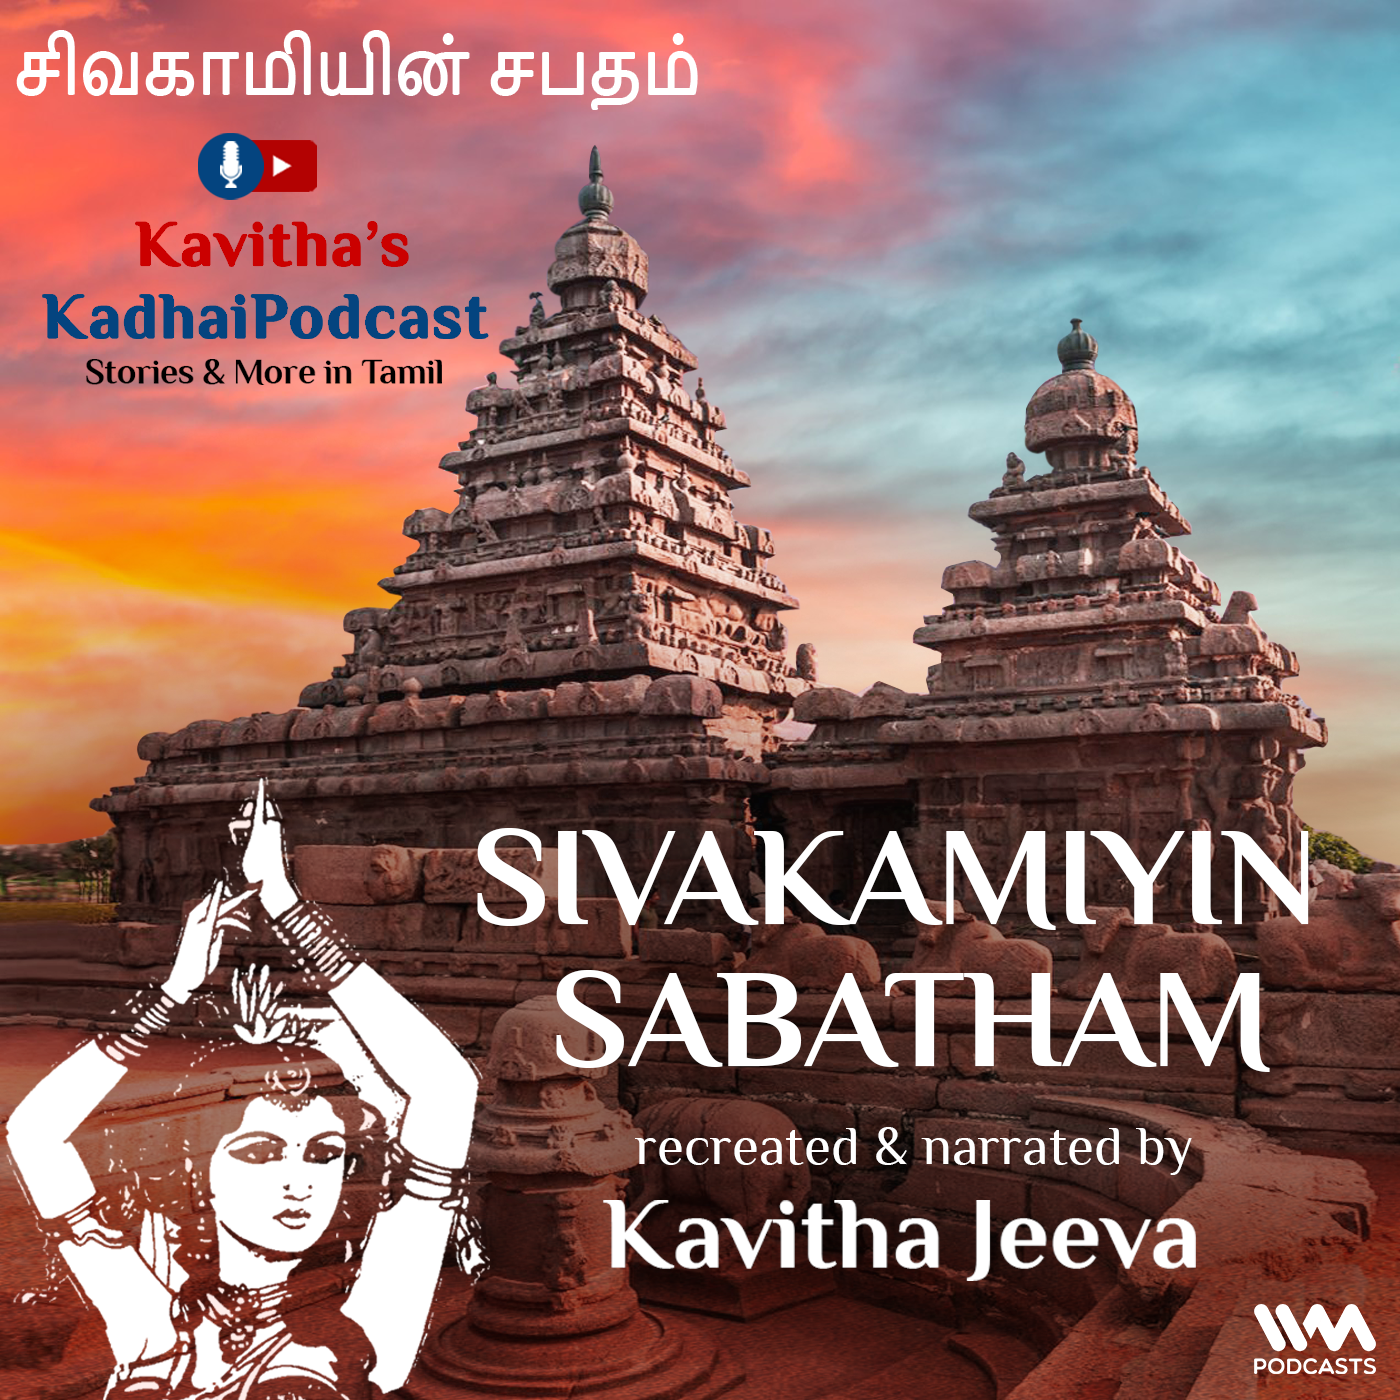 KadhaiPodcast's Sivakamiyin Sabatham with Kavitha Jeeva - Episode #95